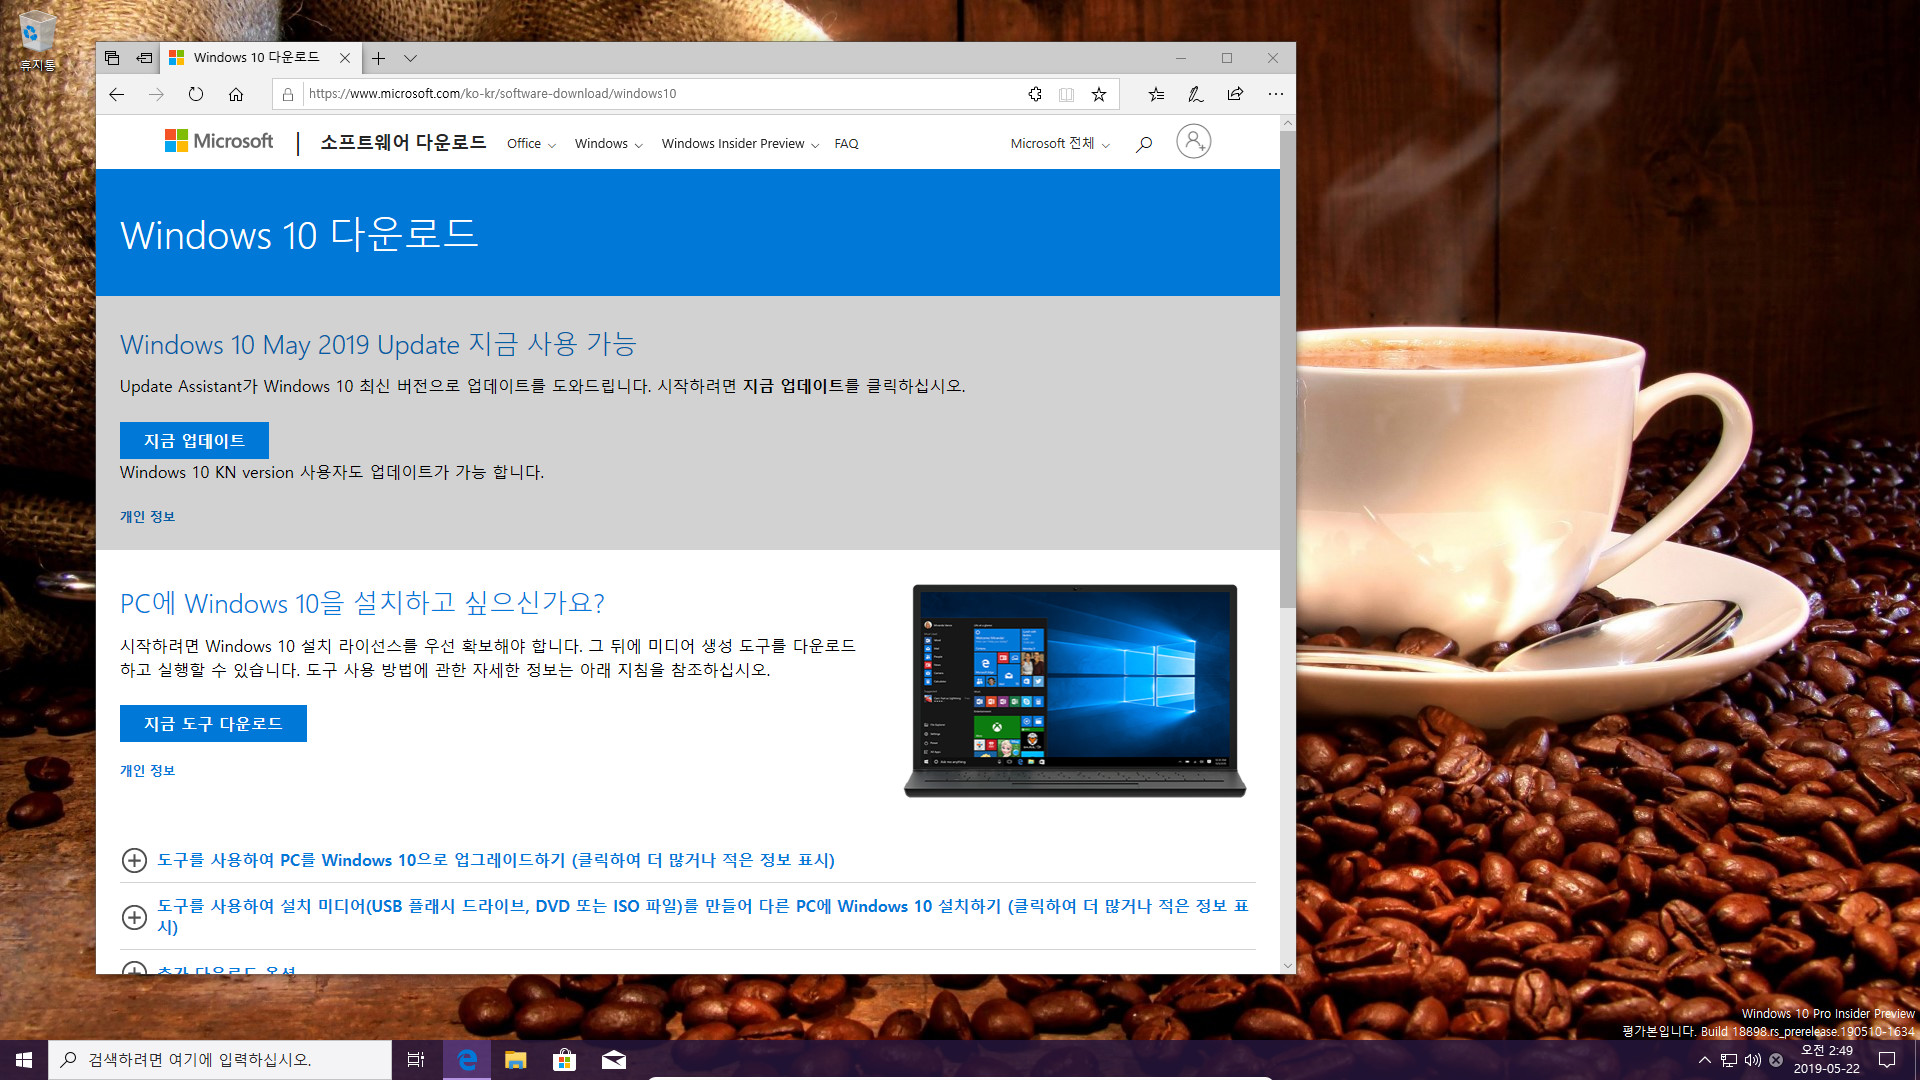 Windows 10 버전 1903 정식 출시됨 [코드네임 19H1, 빌드 18362, Windows 10 May 2019 Update] 한국시간으로 2019년 5월 22일 오전 2시 2019-05-22_024957.jpg